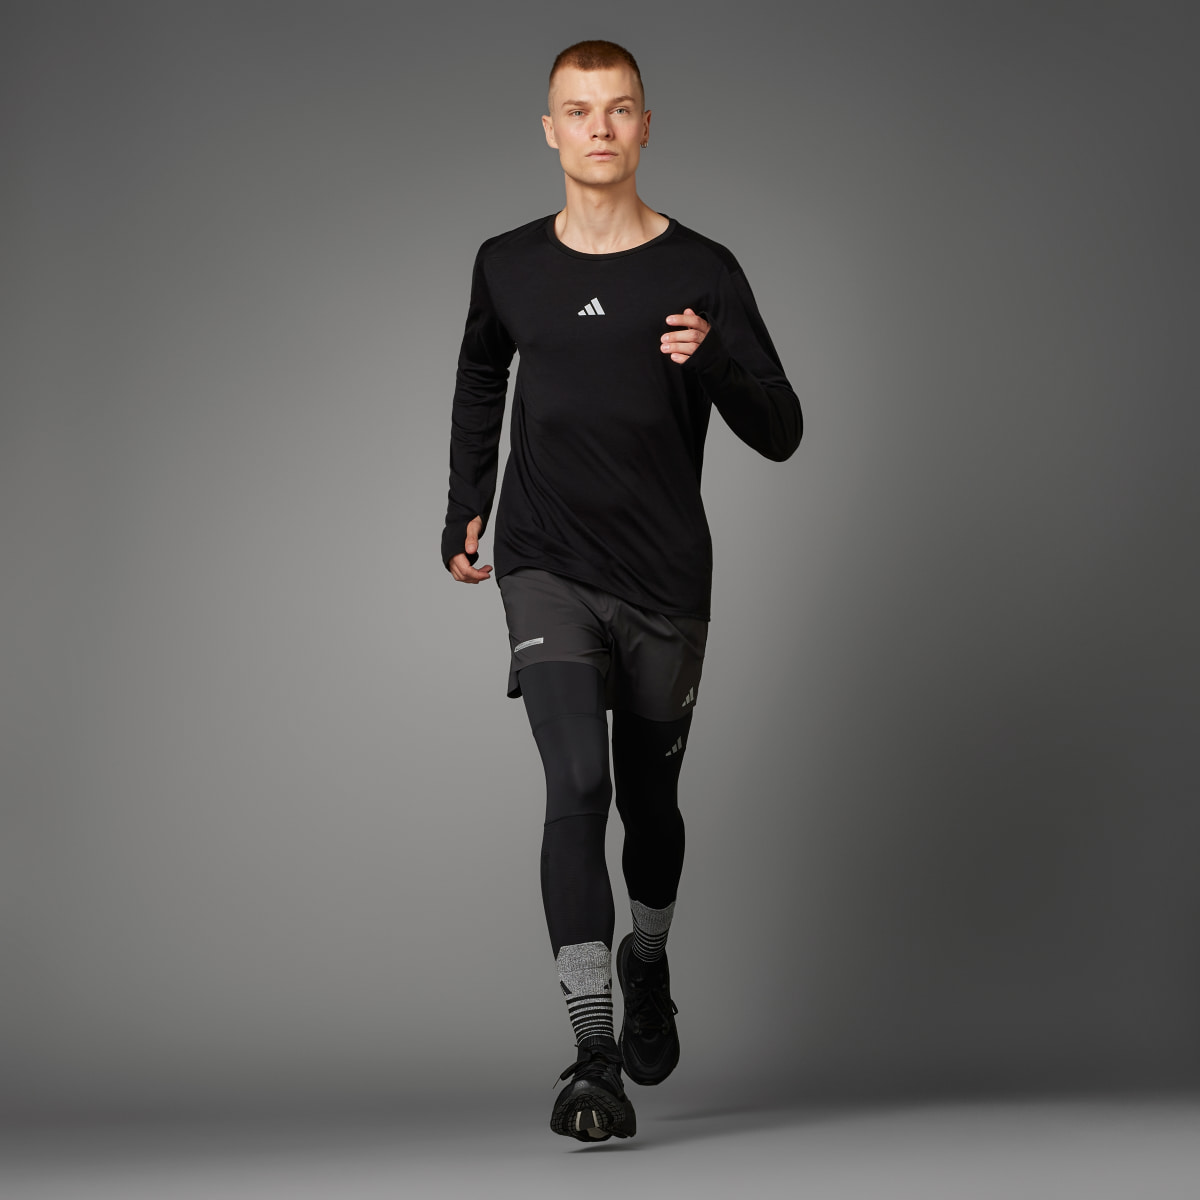 Adidas Koszulka Ultimate Running Conquer the Elements Merino Long Sleeve. 10